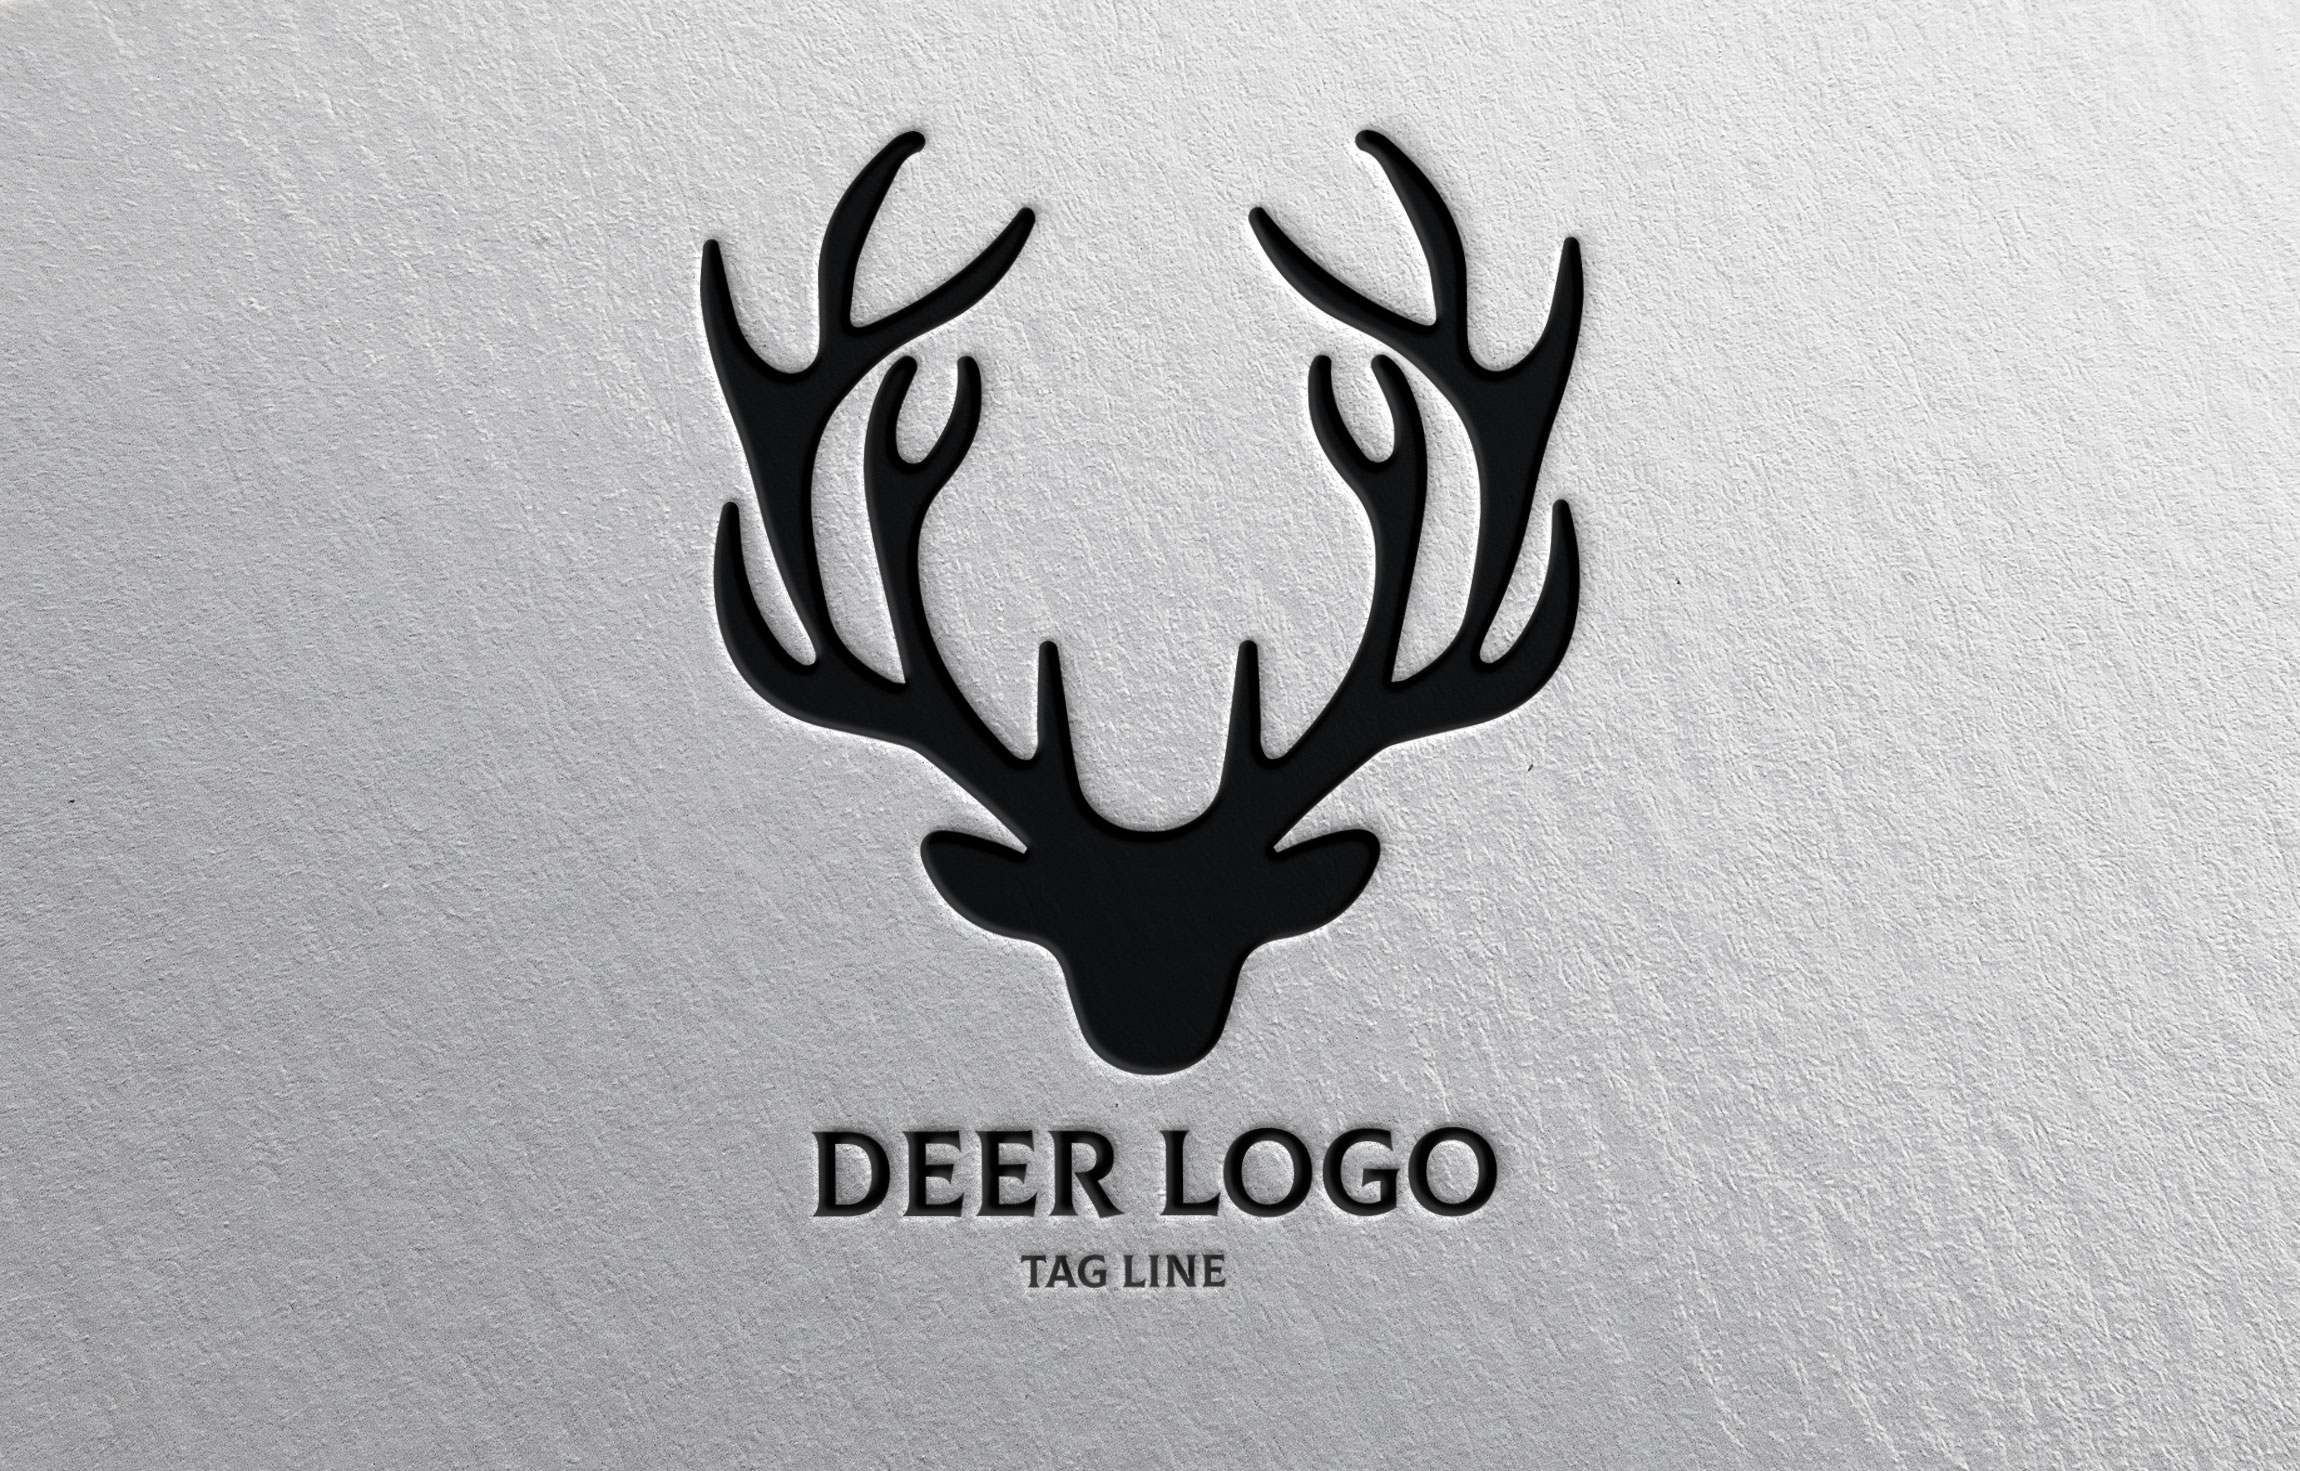 Head Deer Vintage Logo Vector Illustration Template Design Stock  Illustration - Download Image Now - iStock